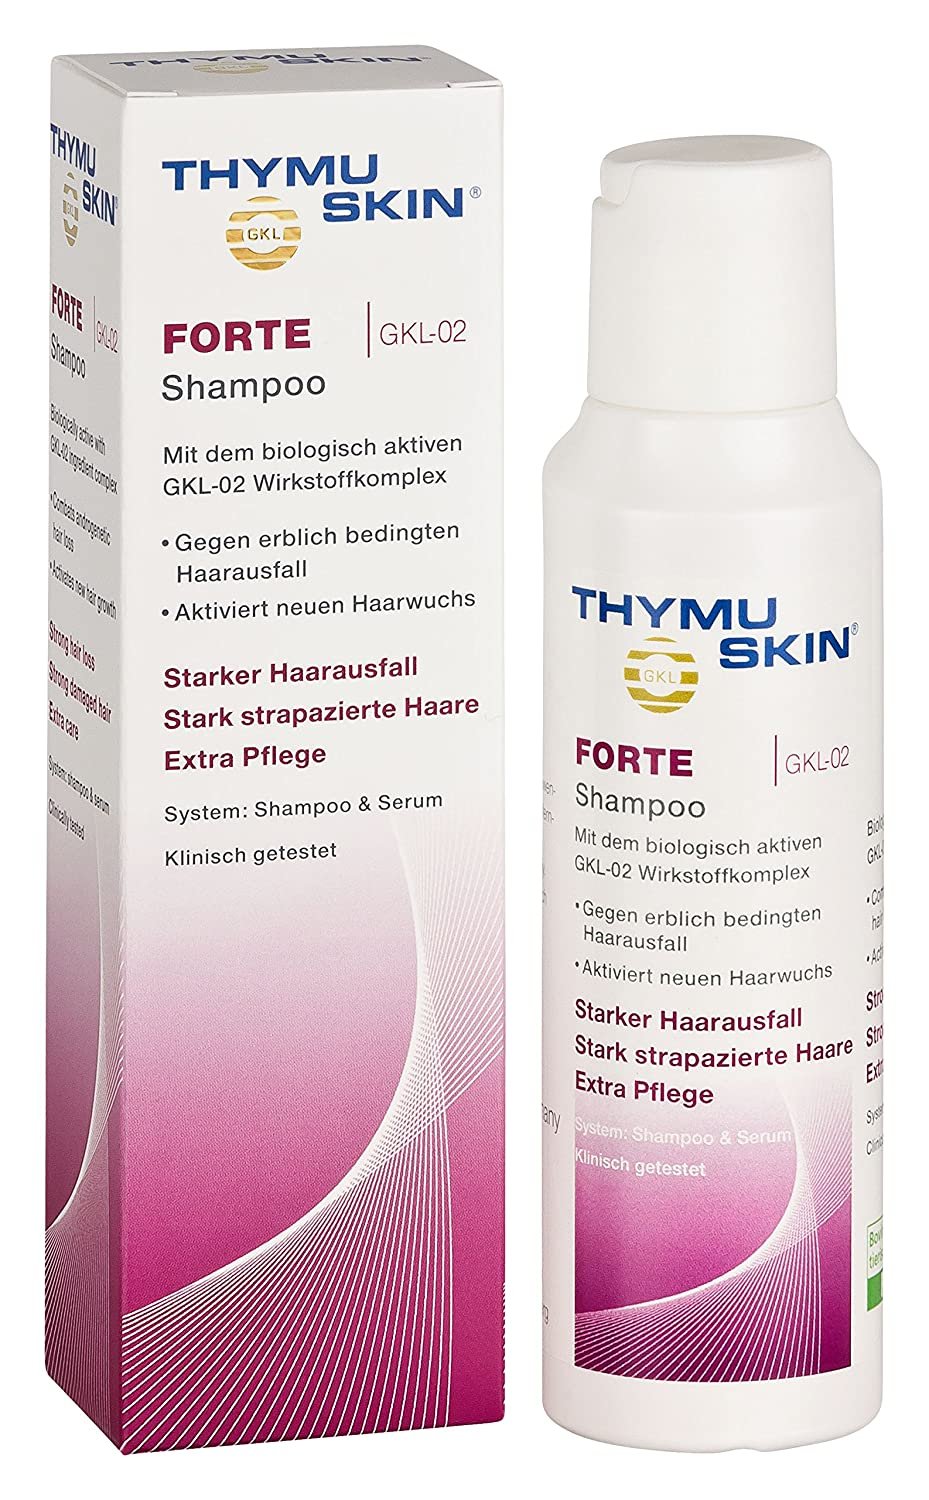 THYMUSKIN Forte Shampoo 100ml